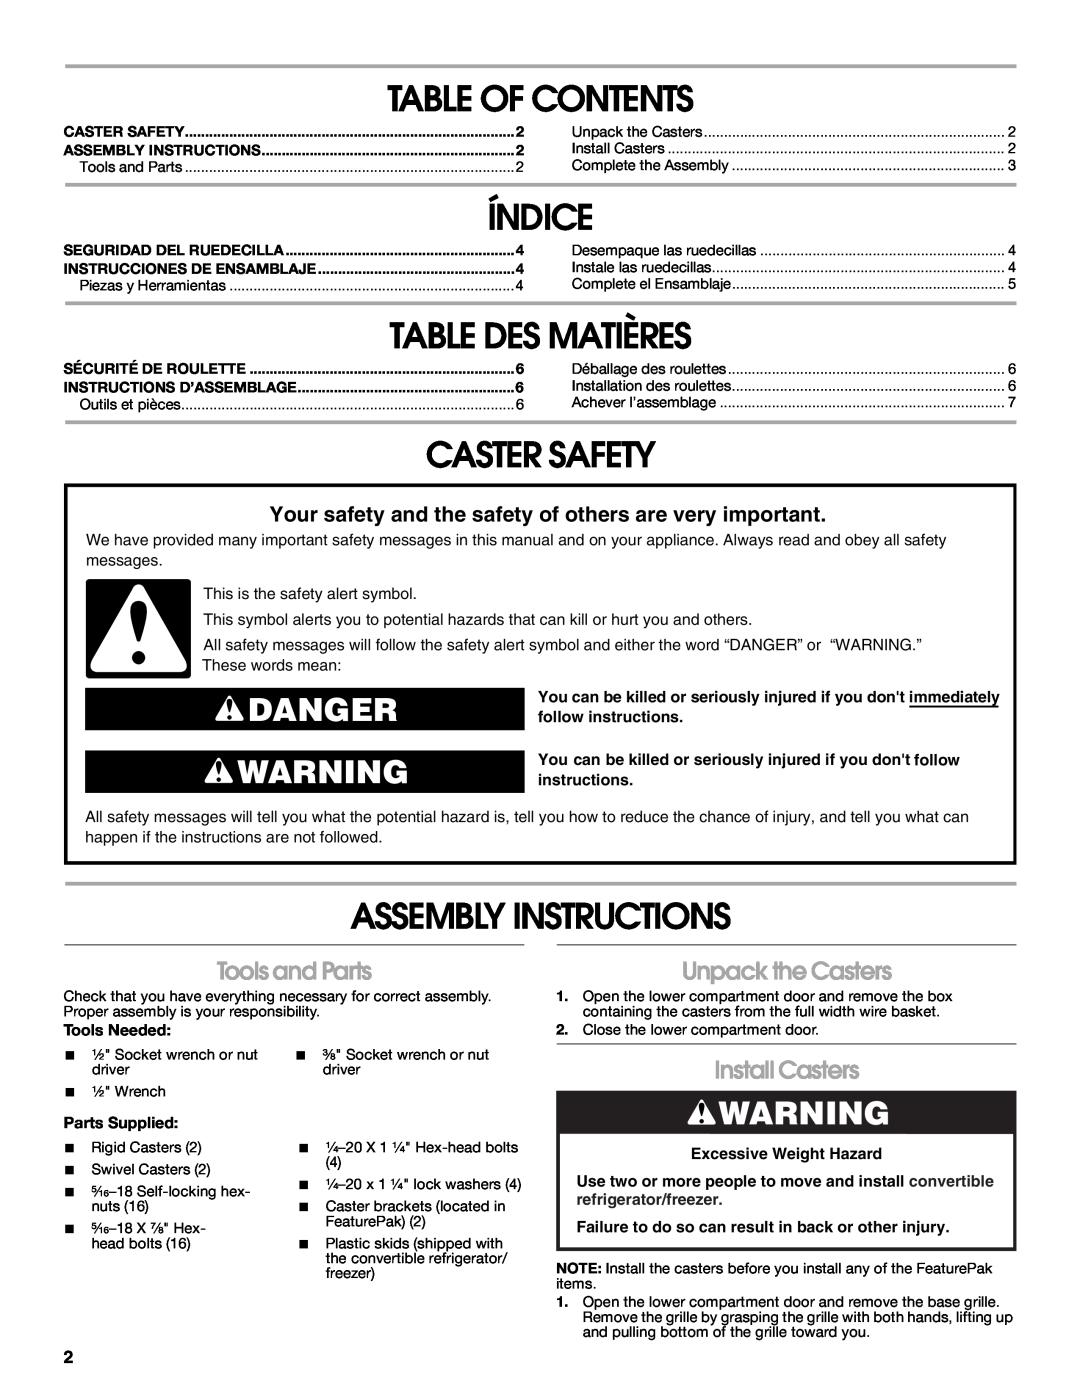 Gladiator Garageworks 2253210A Table Of Contents, Índice, Table Des Matières, Caster Safety, Assembly Instructions, Danger 